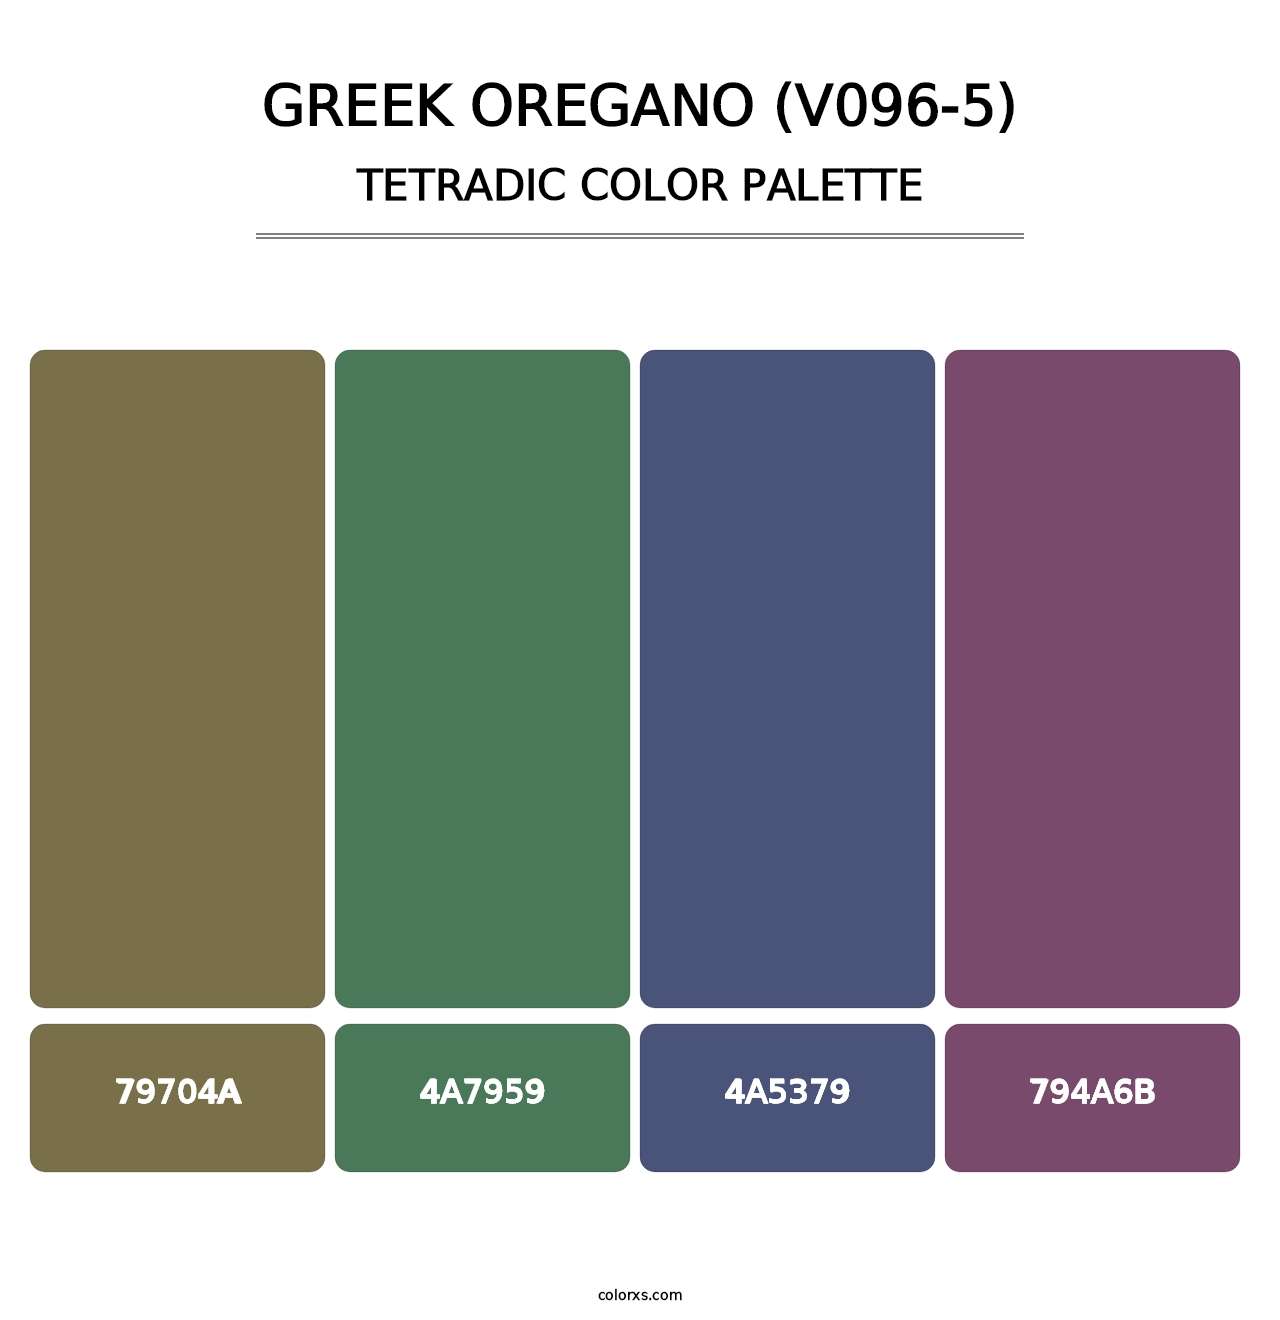 Greek Oregano (V096-5) - Tetradic Color Palette